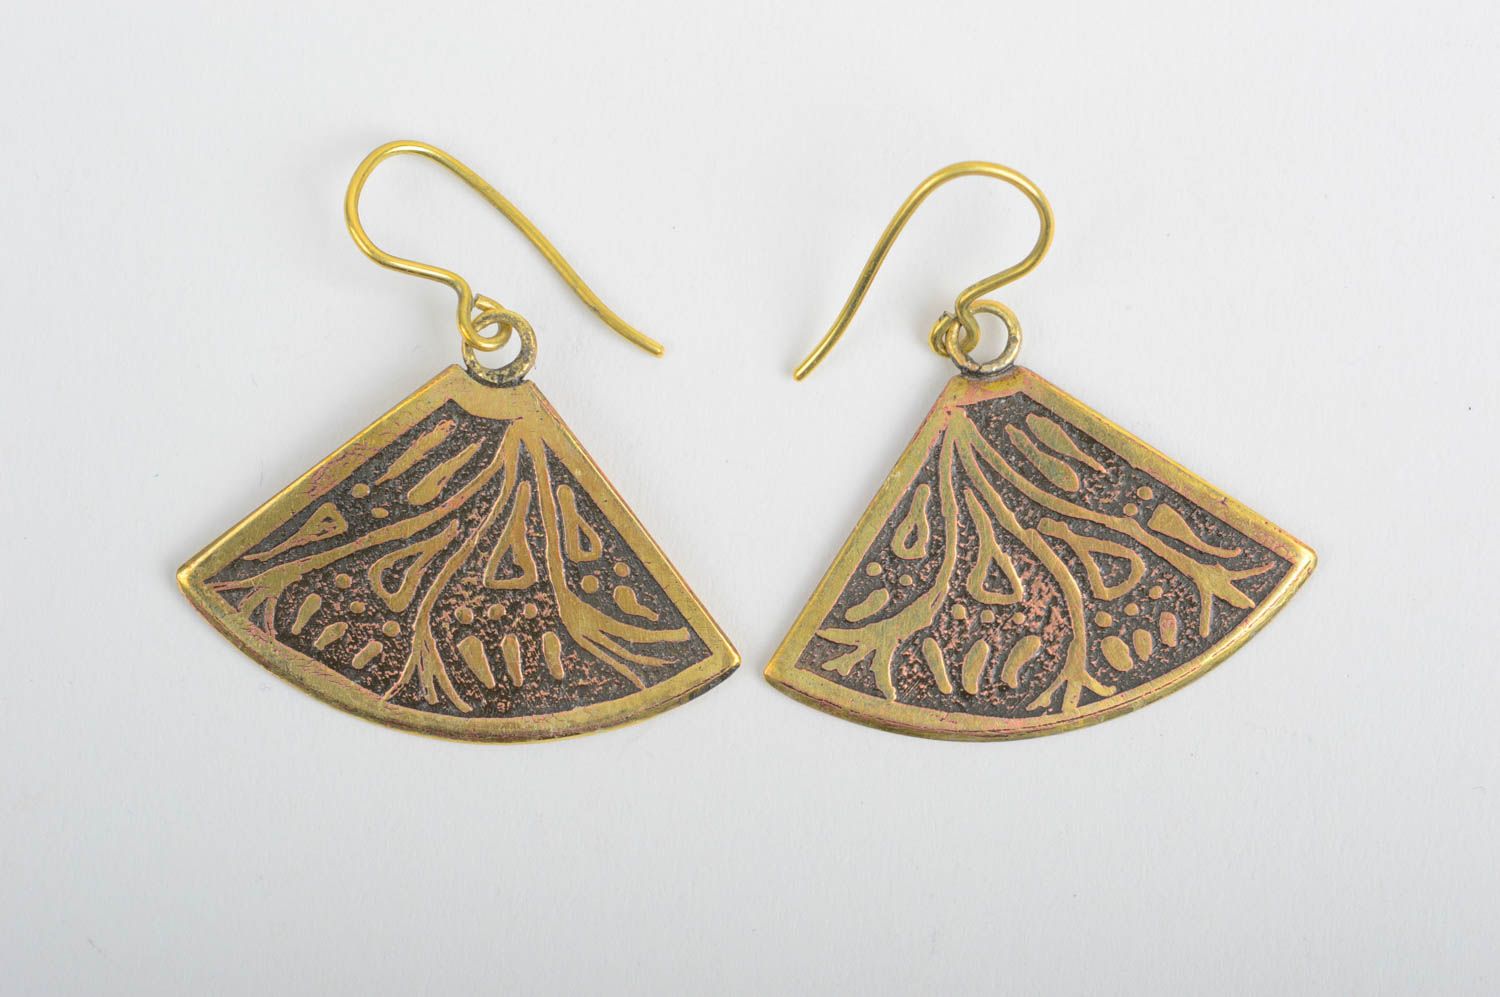 Handmade brass earrings handmade metal jewelry brass accessories for girls photo 1